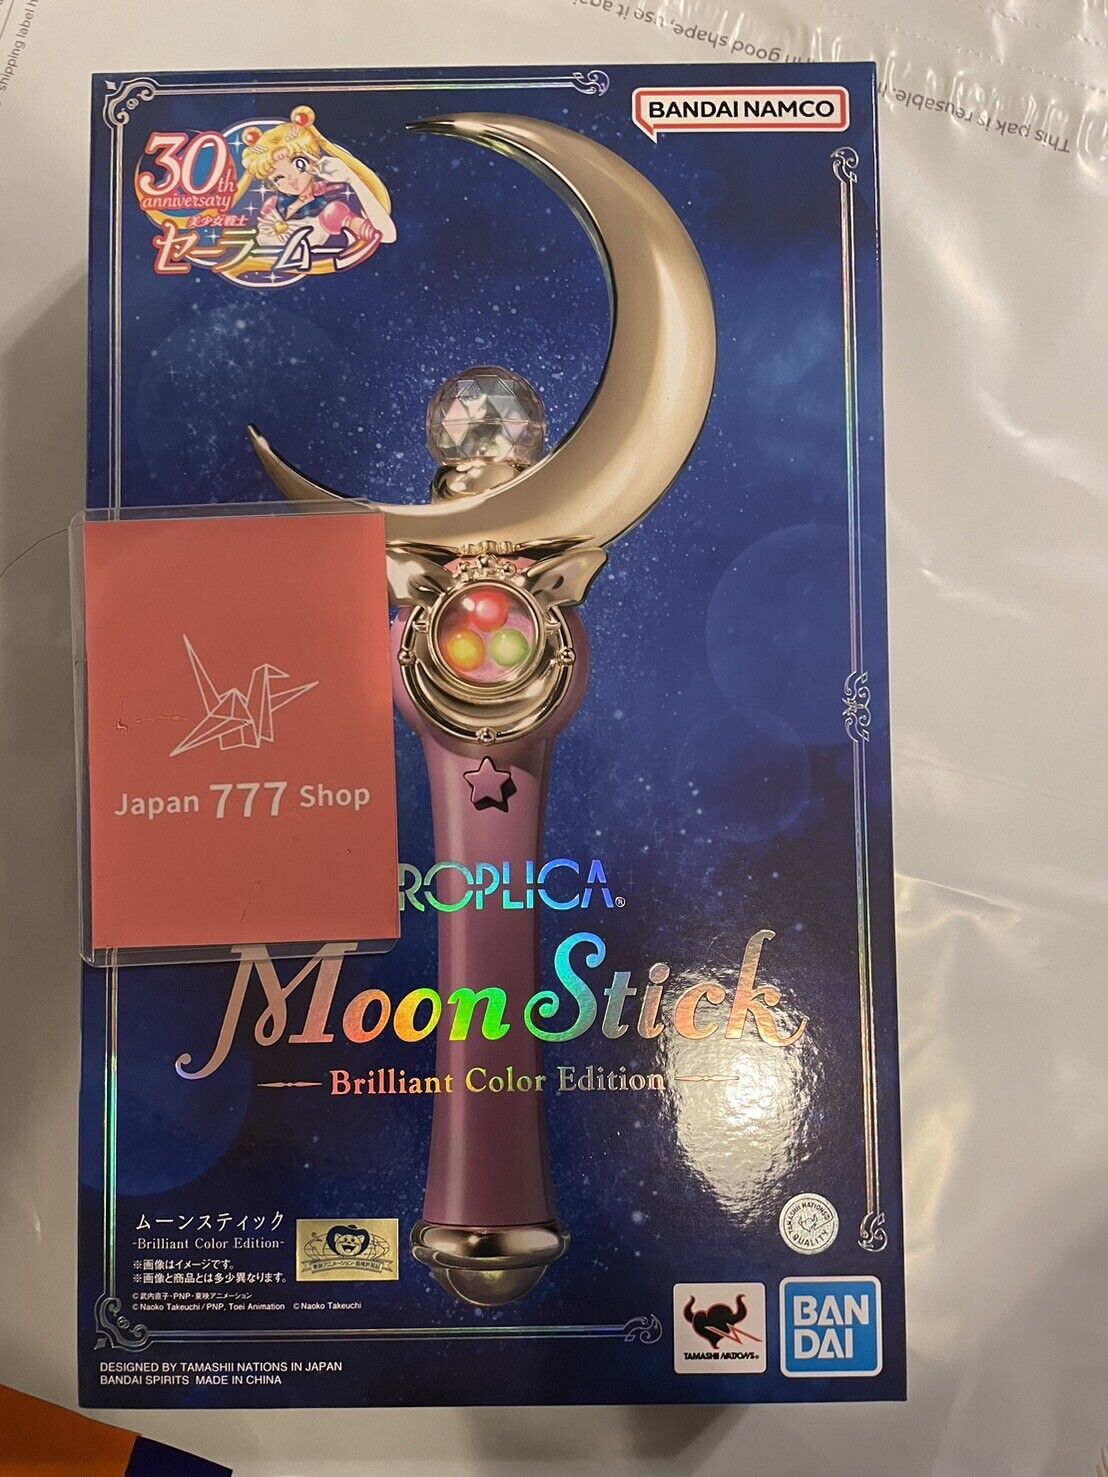 BANDAI Sailor Moon PROPLICA Moon Stick Brilliant Color Edition fedex Expedited